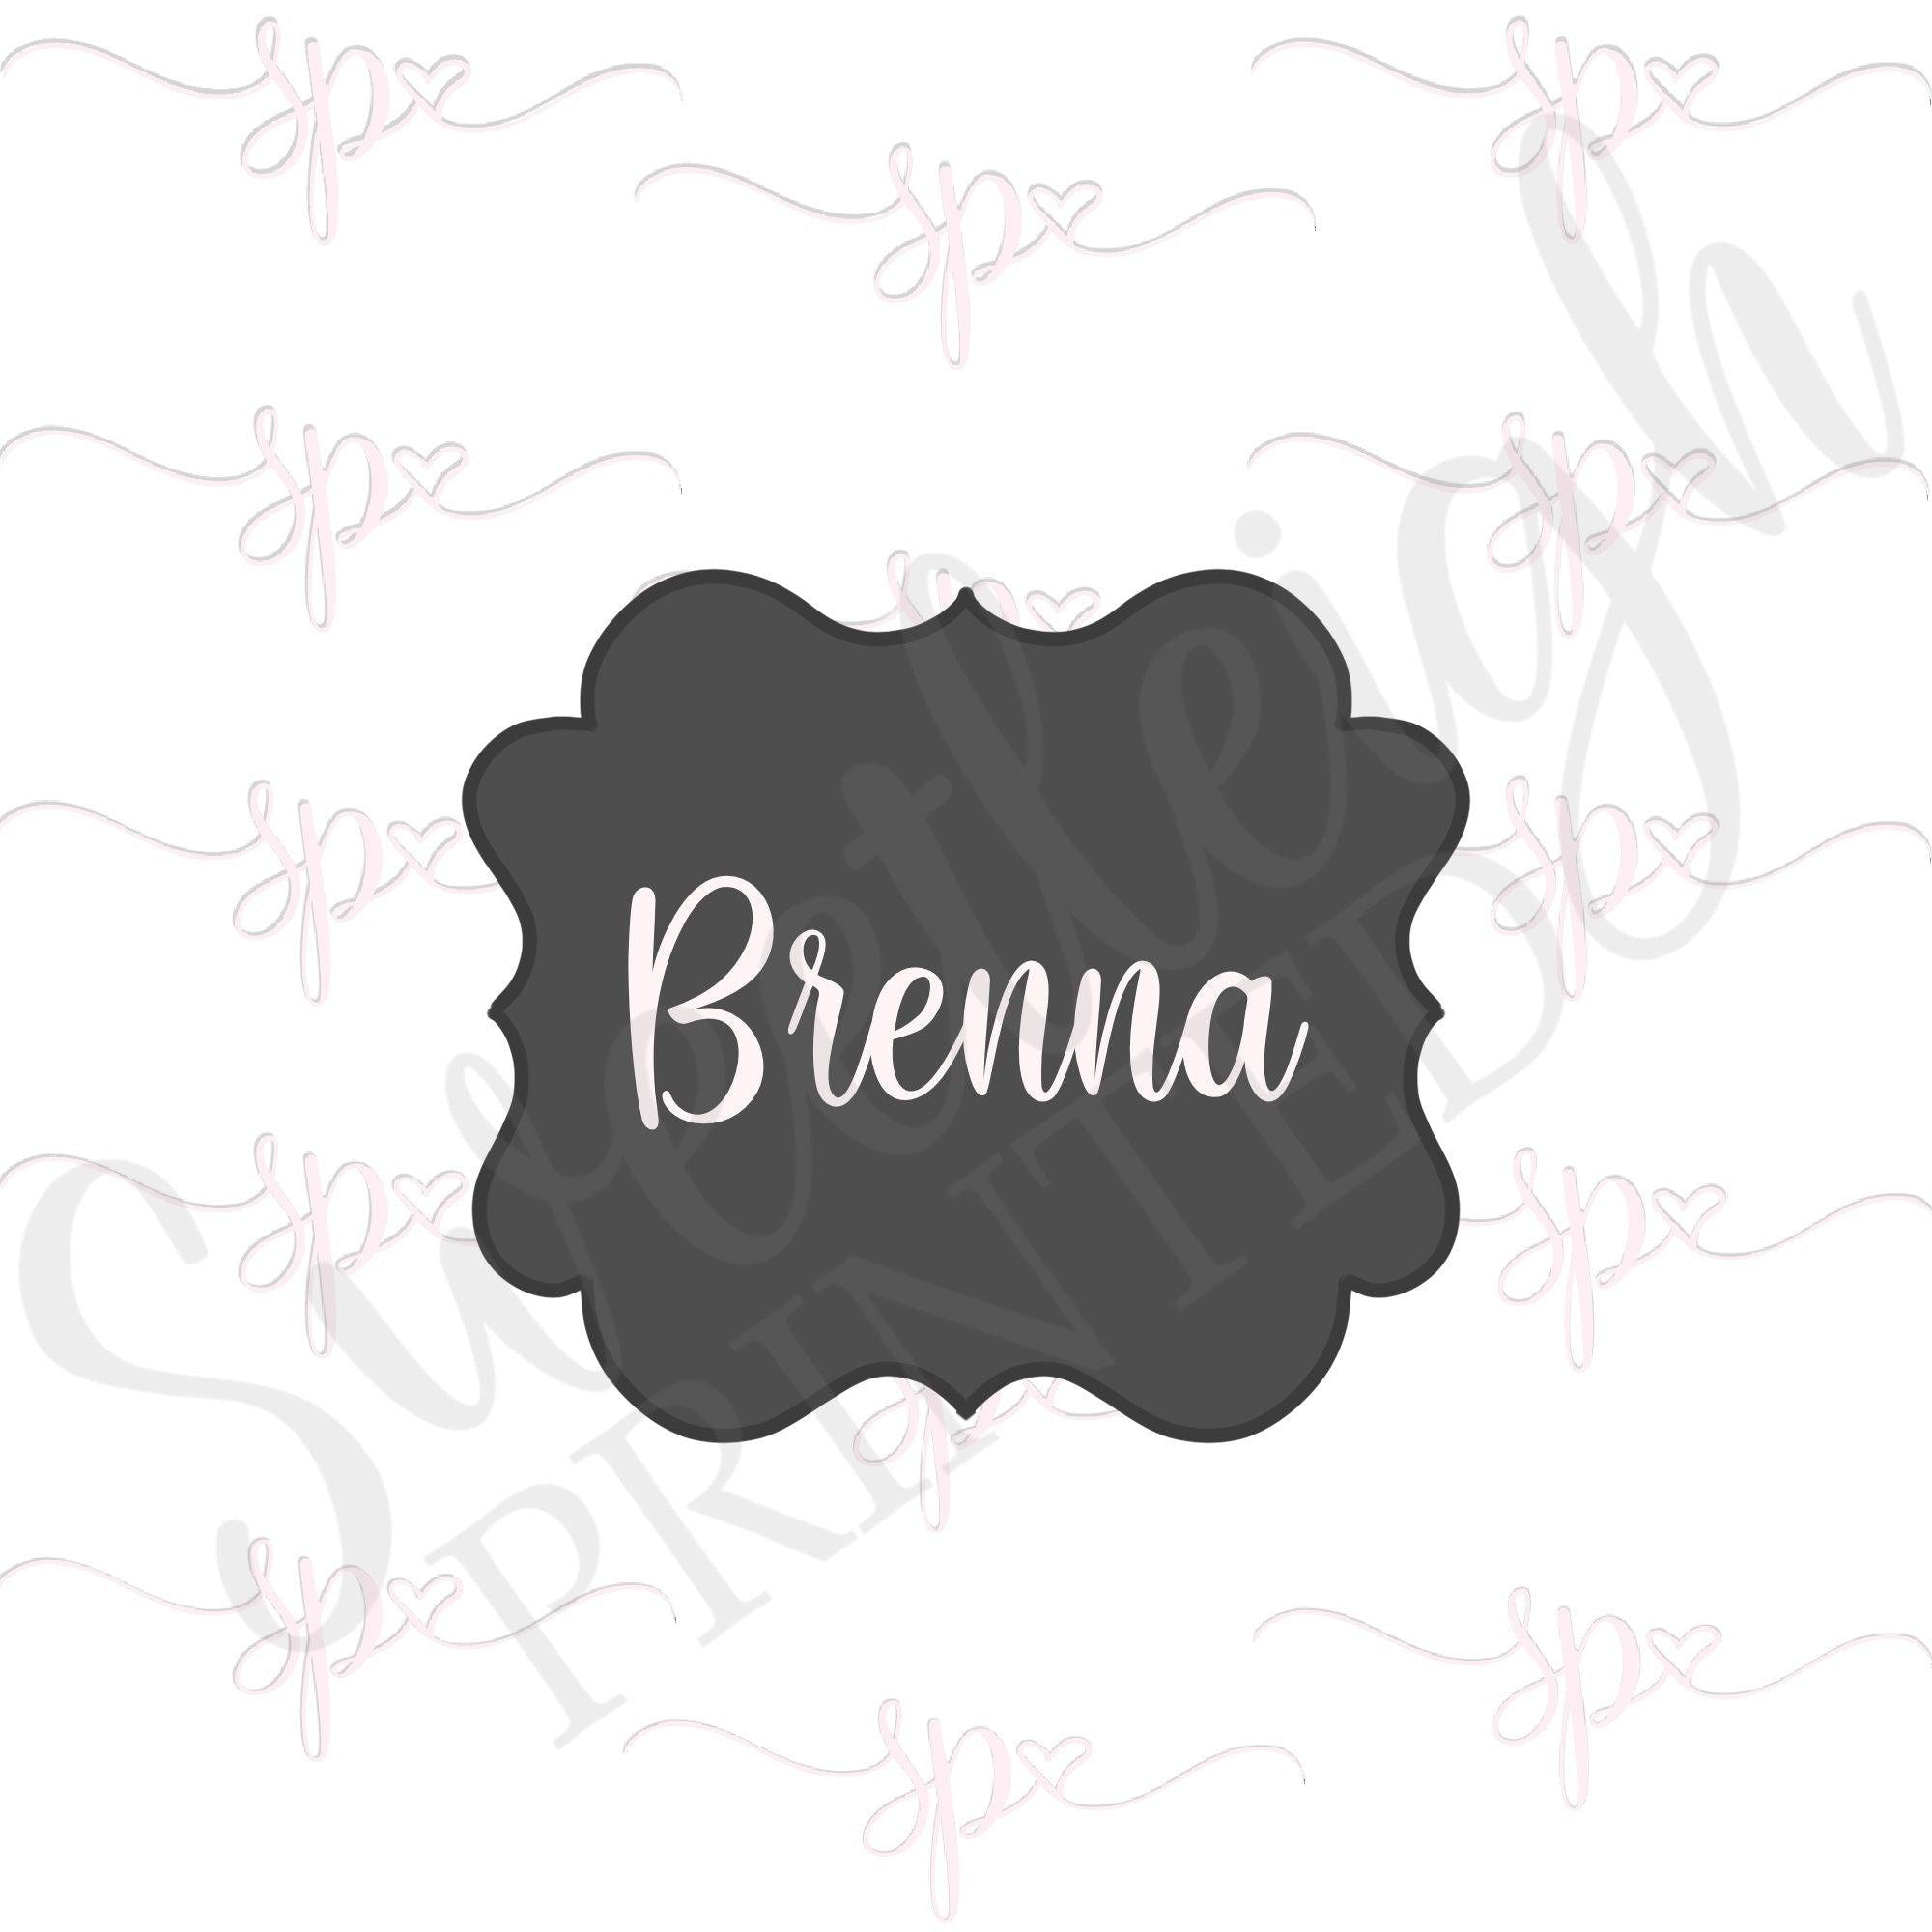 Brenna Plaque Cookie Cutter - Sweetleigh 